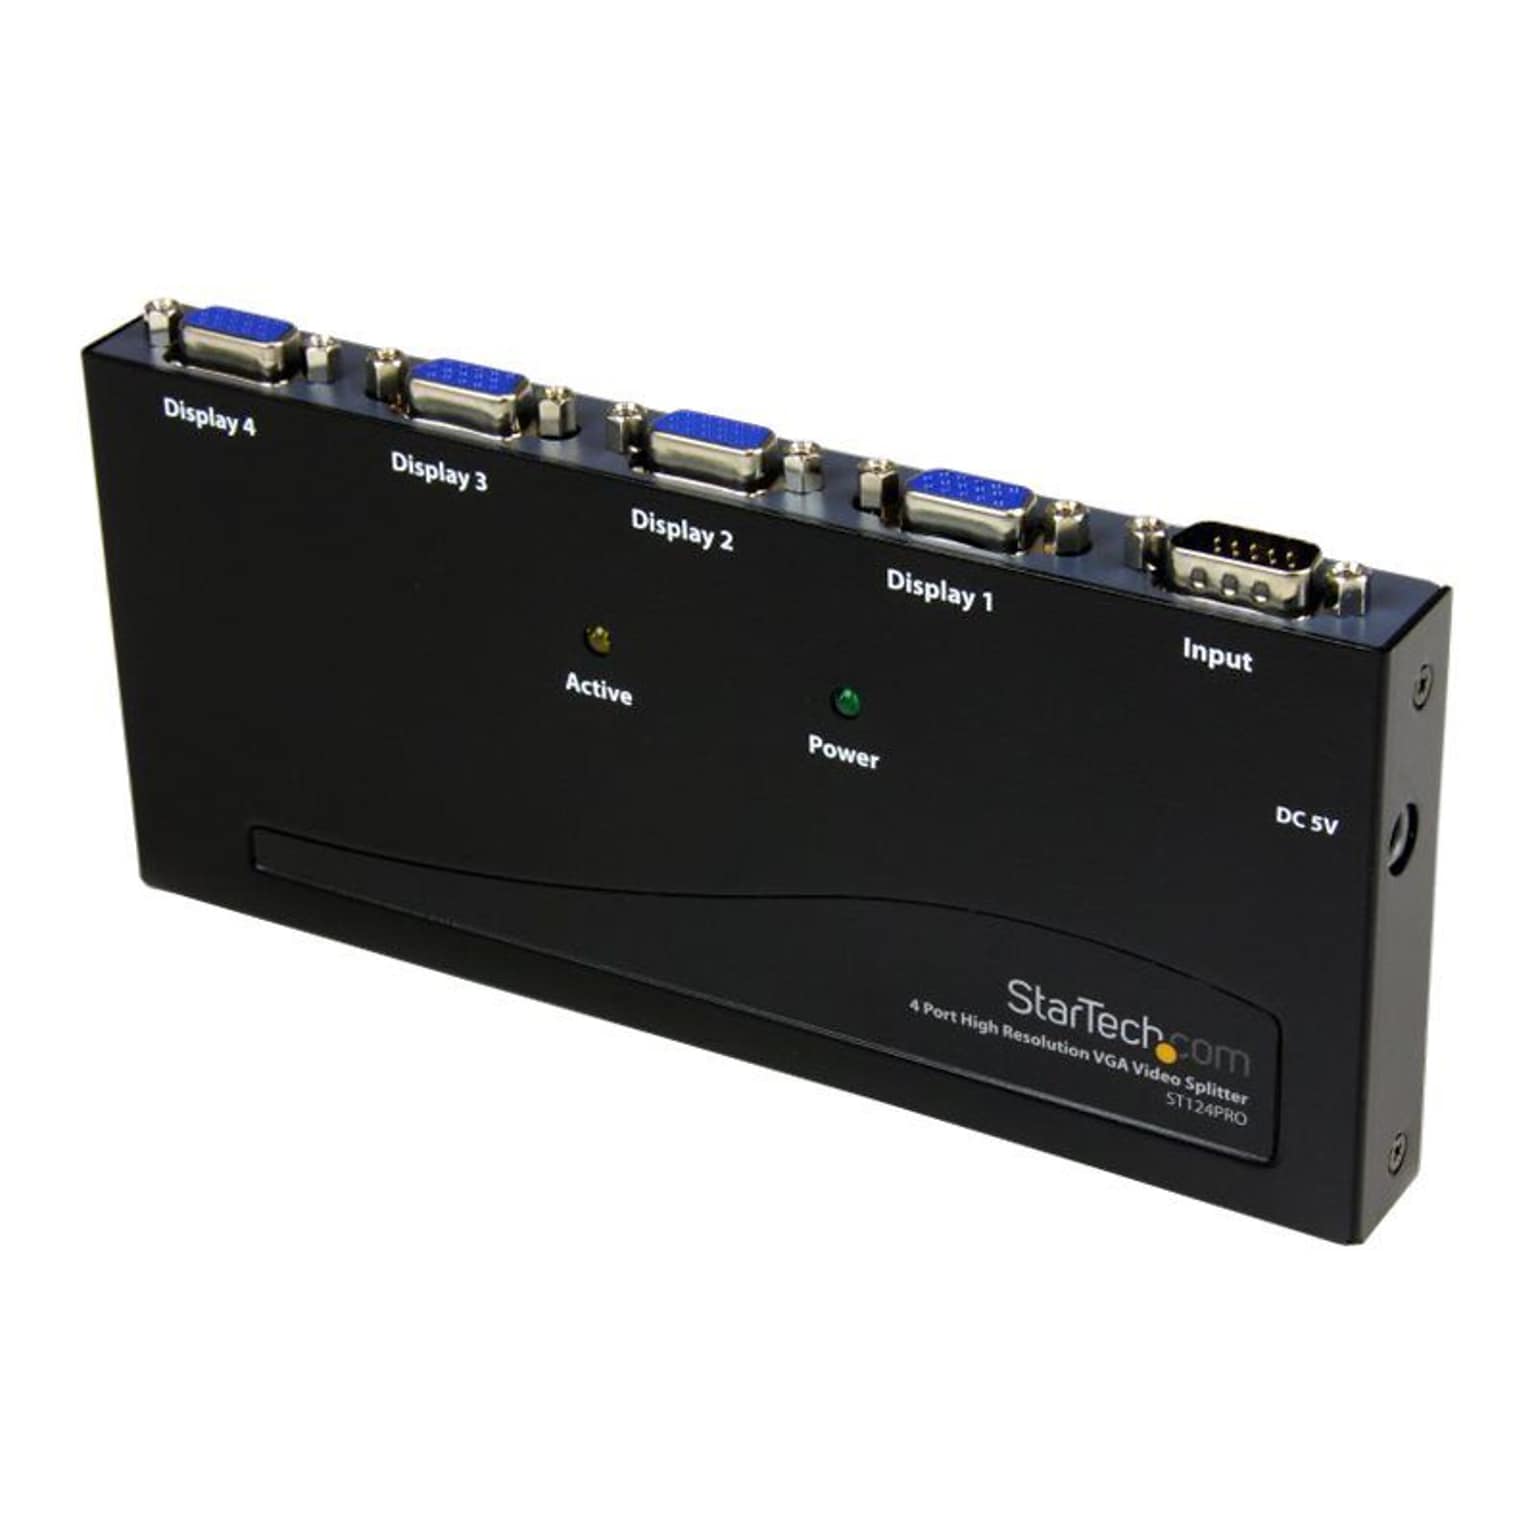 StarTech ST124PRO High Resolution VGA Video Splitter; 350 MHz, 4 Ports